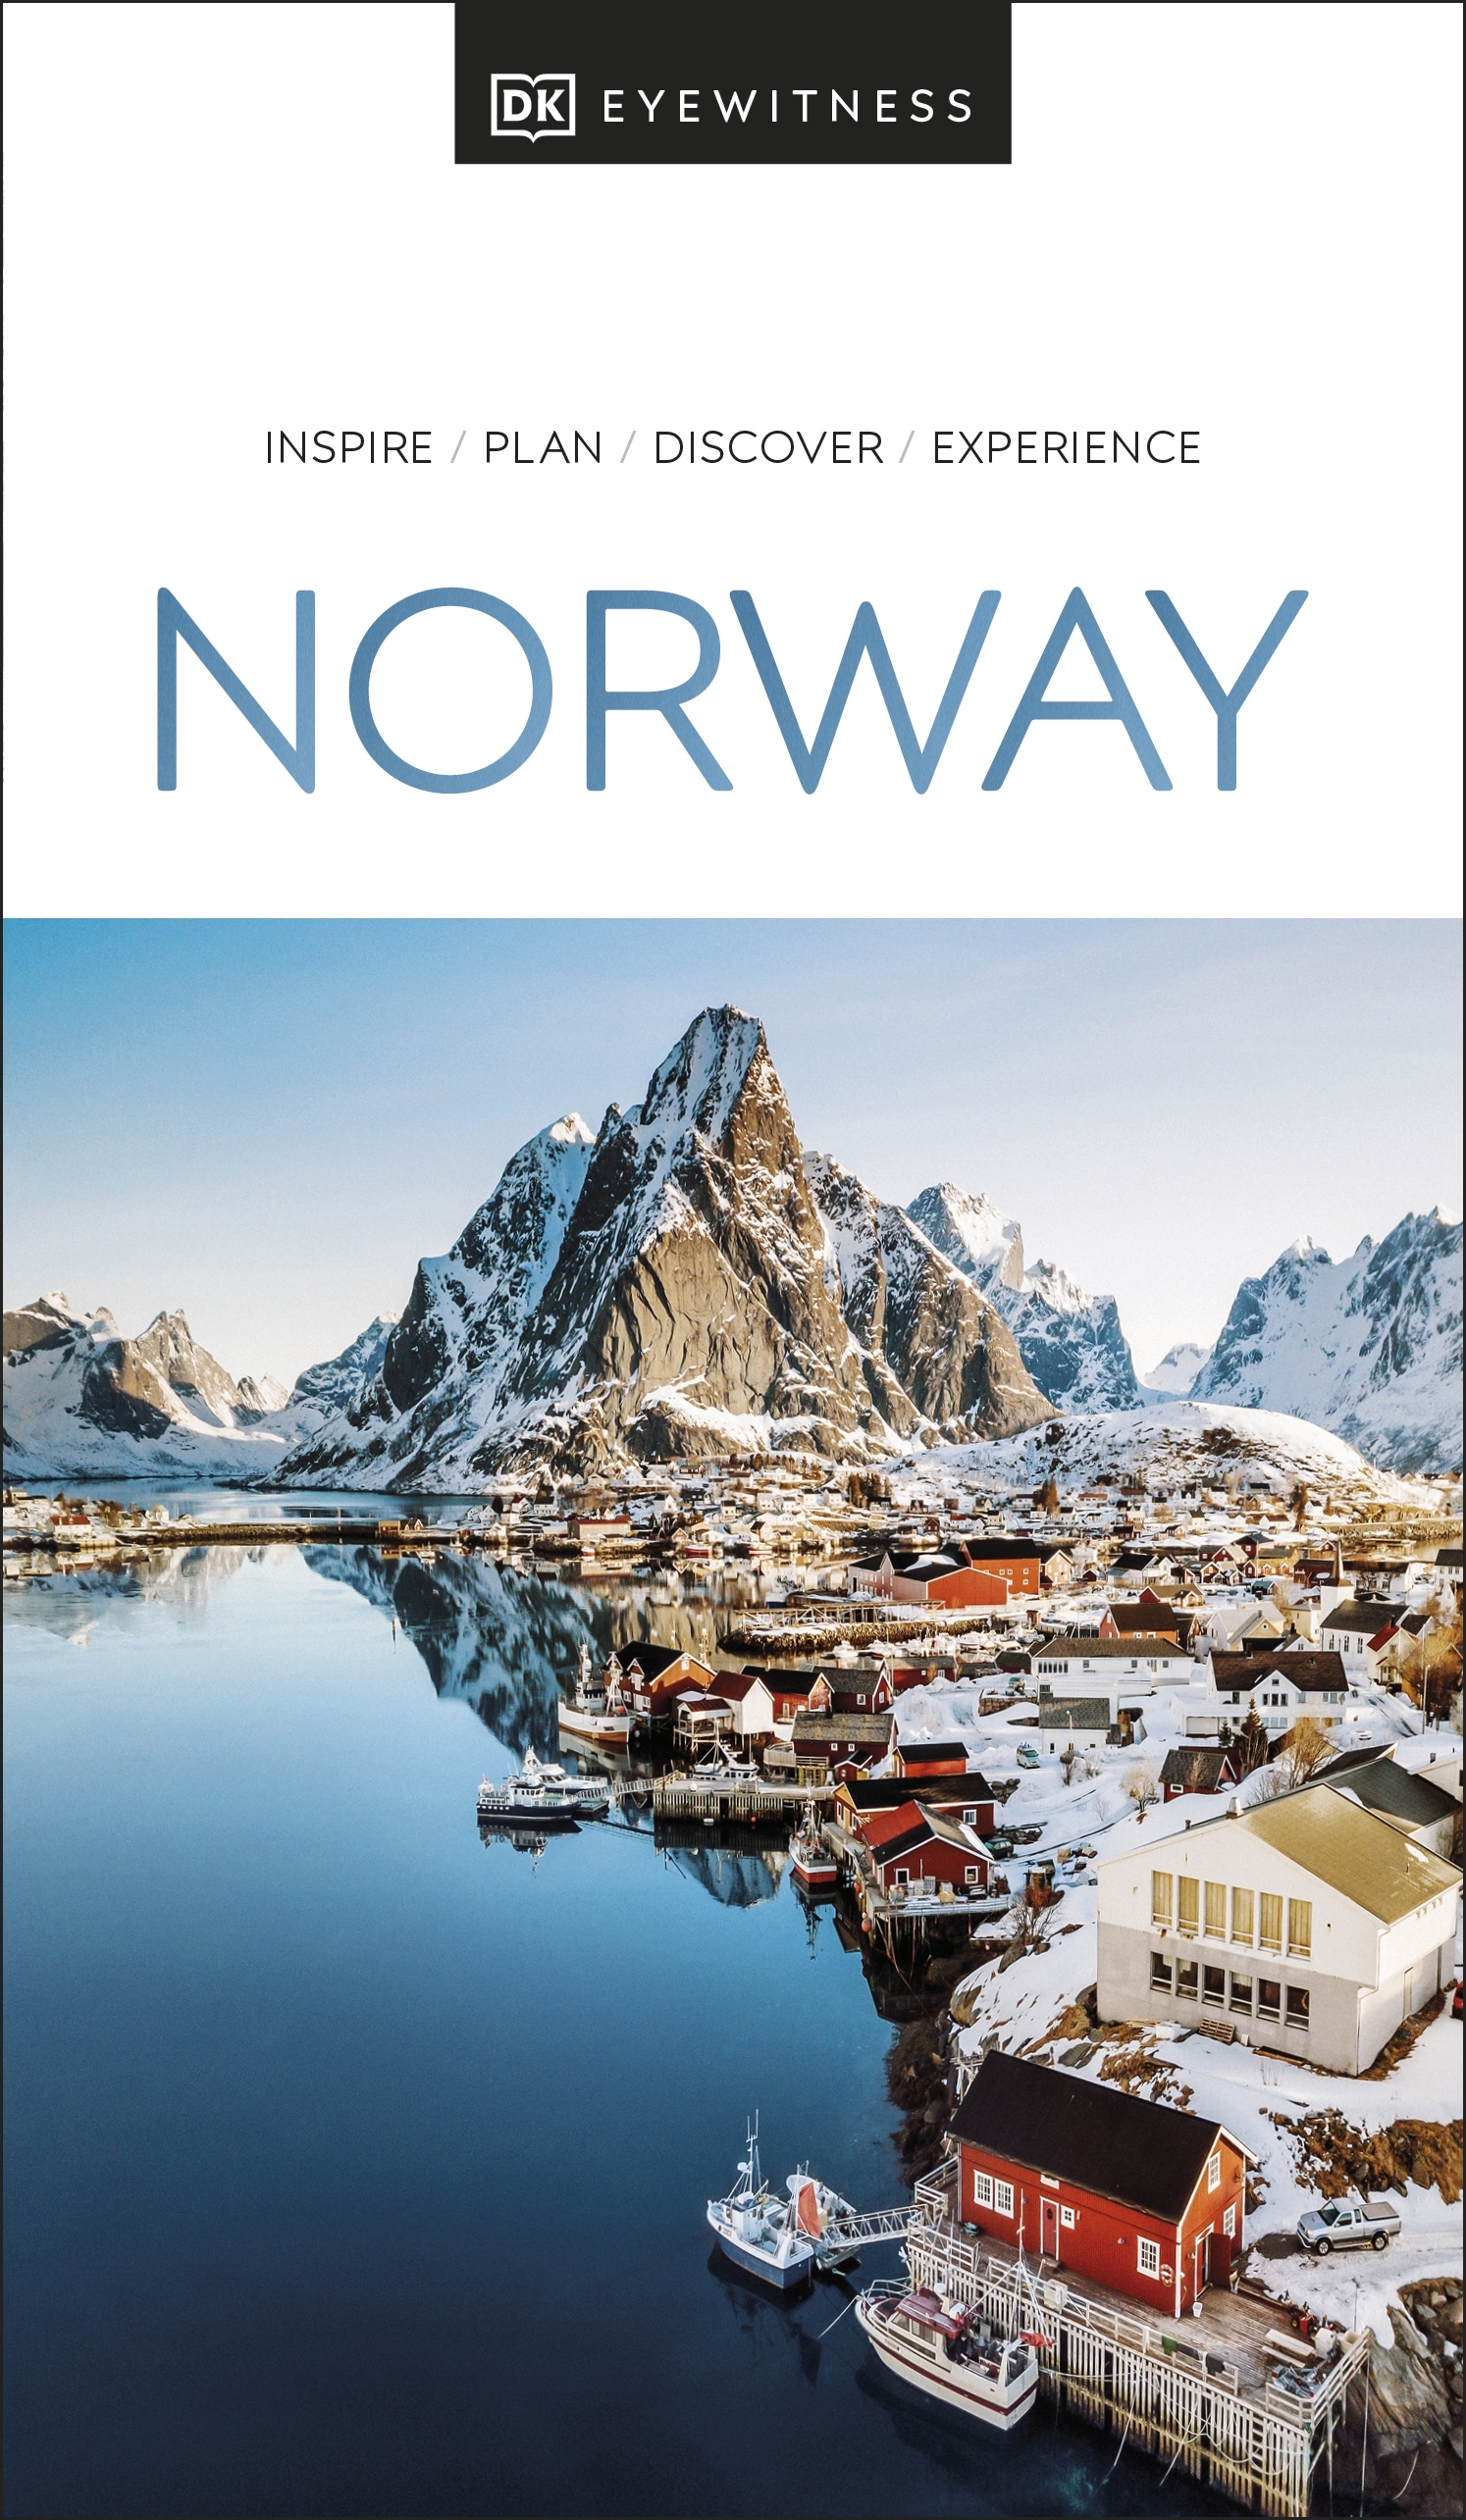 DK Eyewitness Norway by DK Travel   Penguin Books Australia